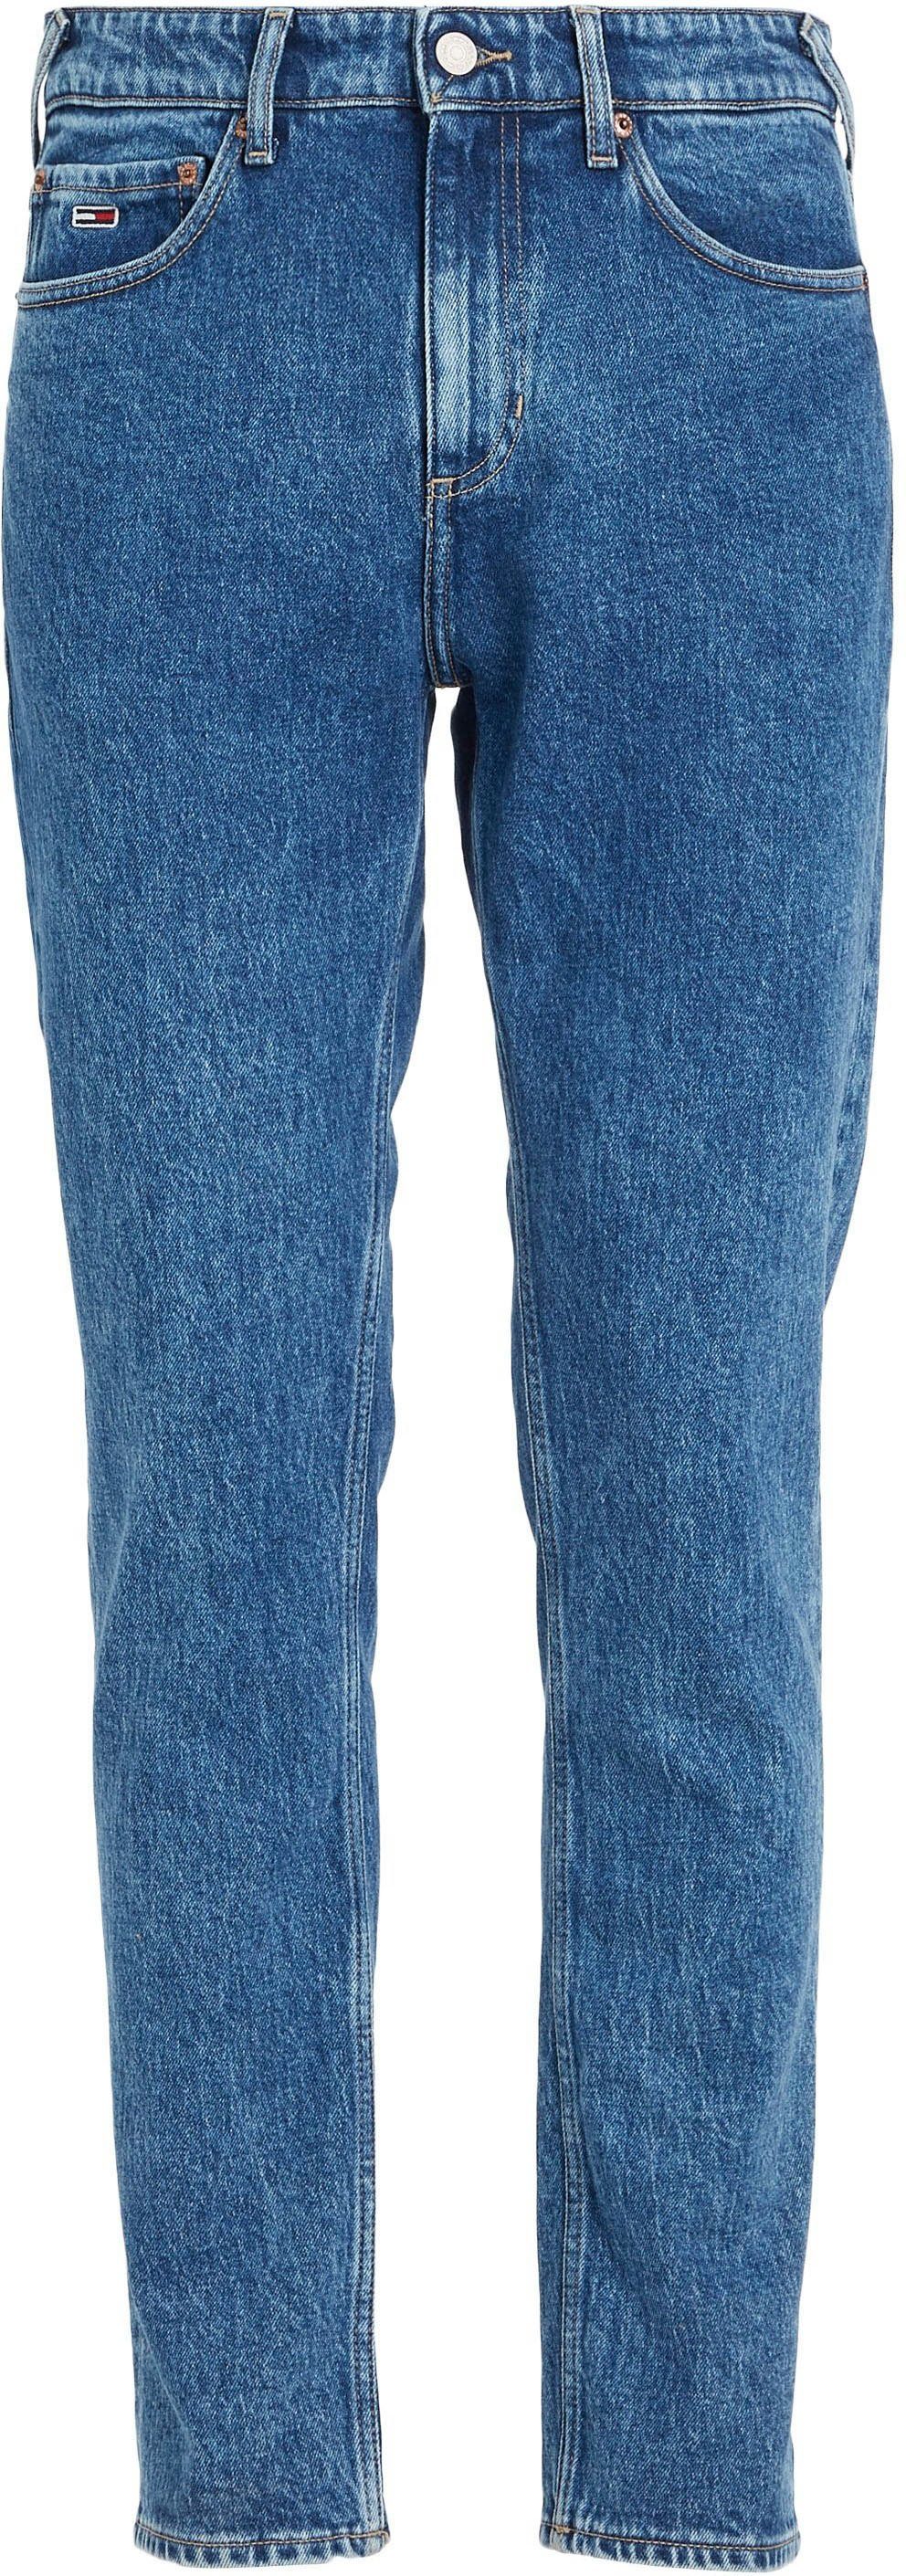 Medium Y SCANTON Denim Tommy 5-Pocket-Jeans SLIM Jeans